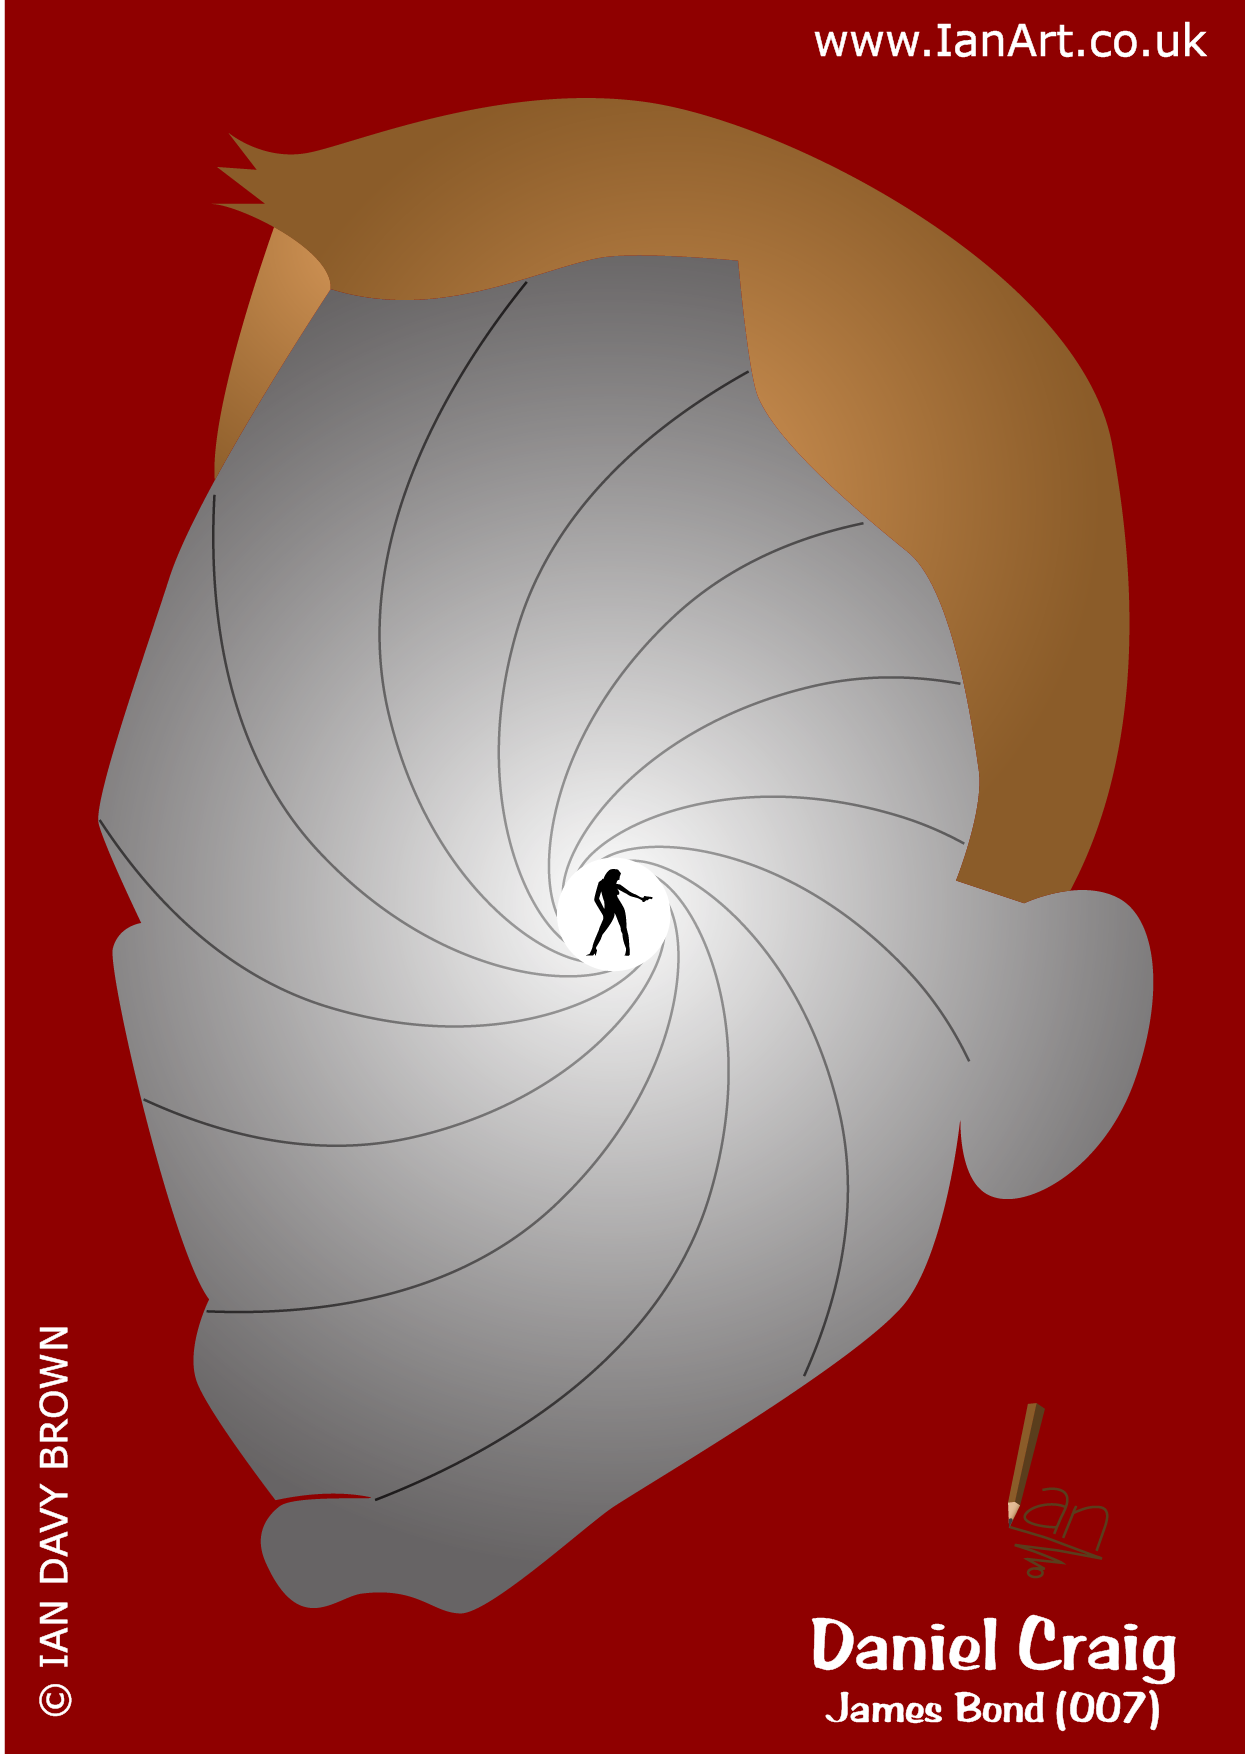 Daniel-Craig-James-Bond-007-Caricature-Symbolic-cartoon-created-Ian-Davy-Brown-IanArt-IDB